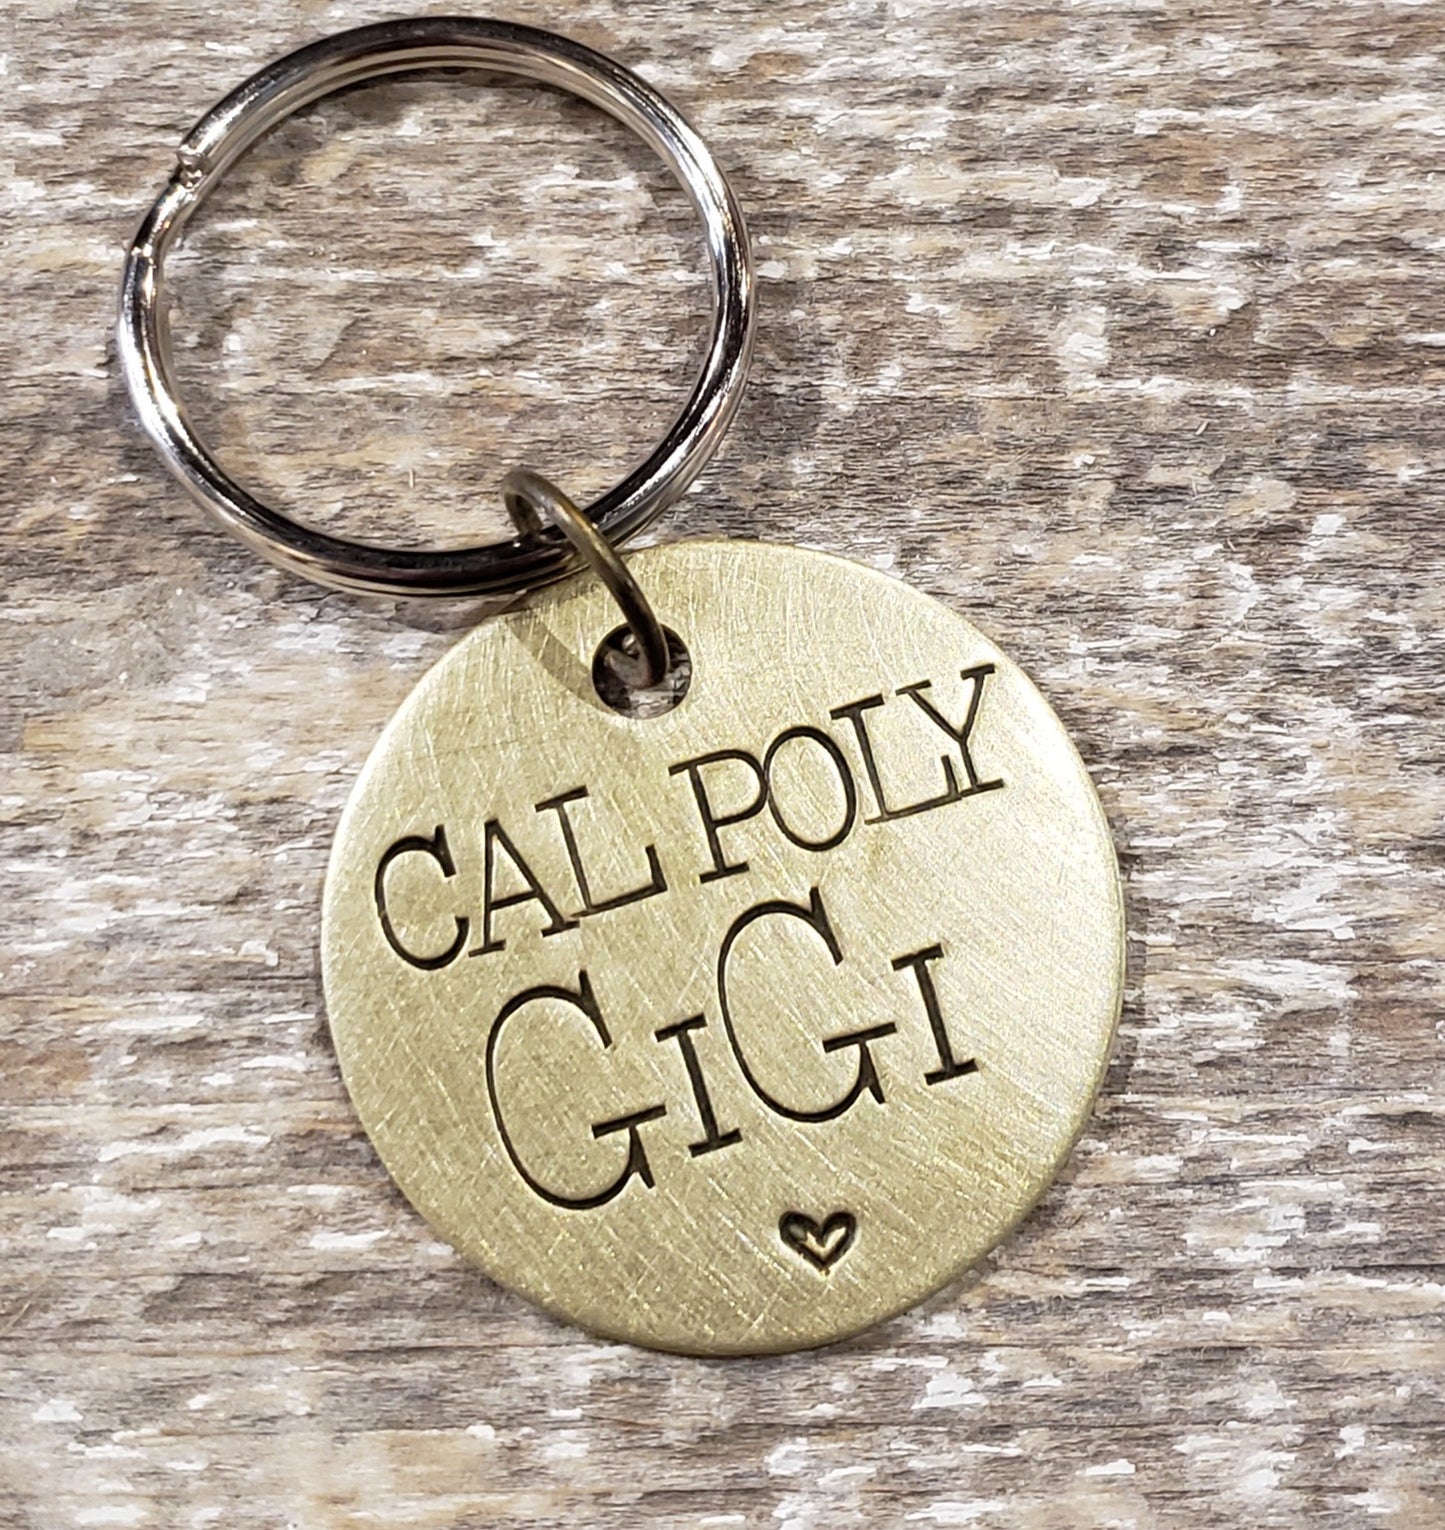 Cal Poly GiGi - Hand Stamped Brass